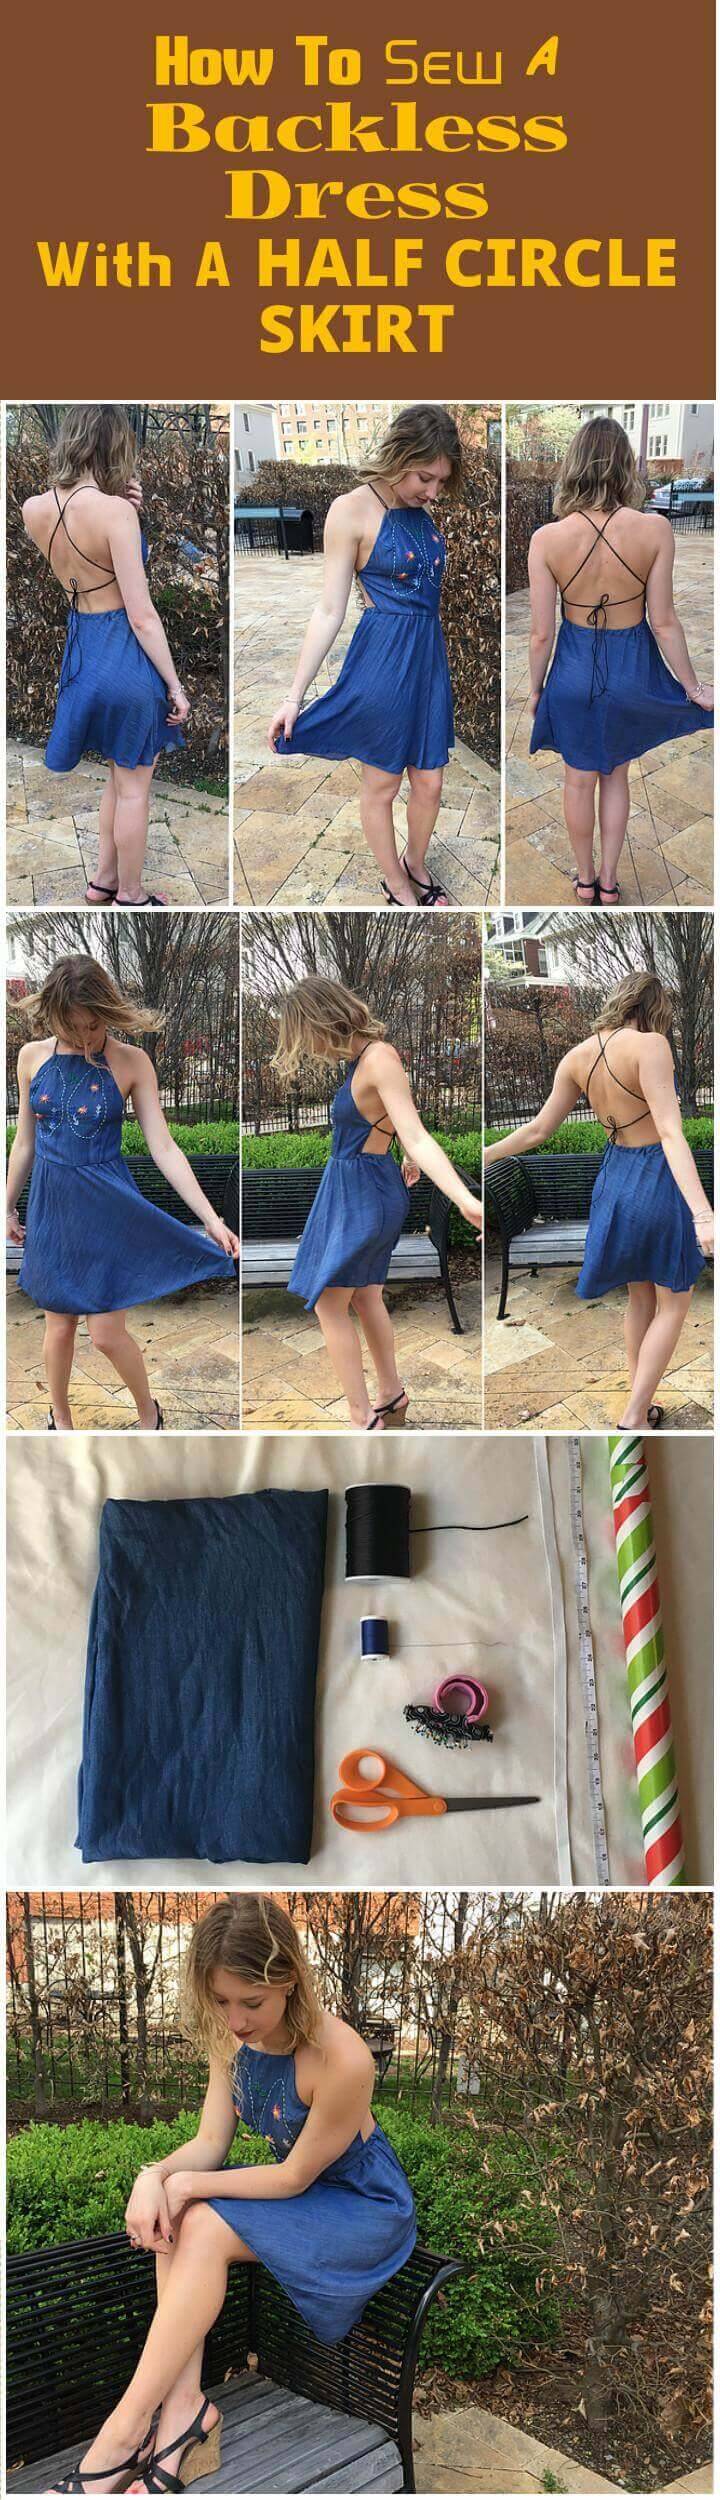 DIY backless dress tutorail with half circle skirt